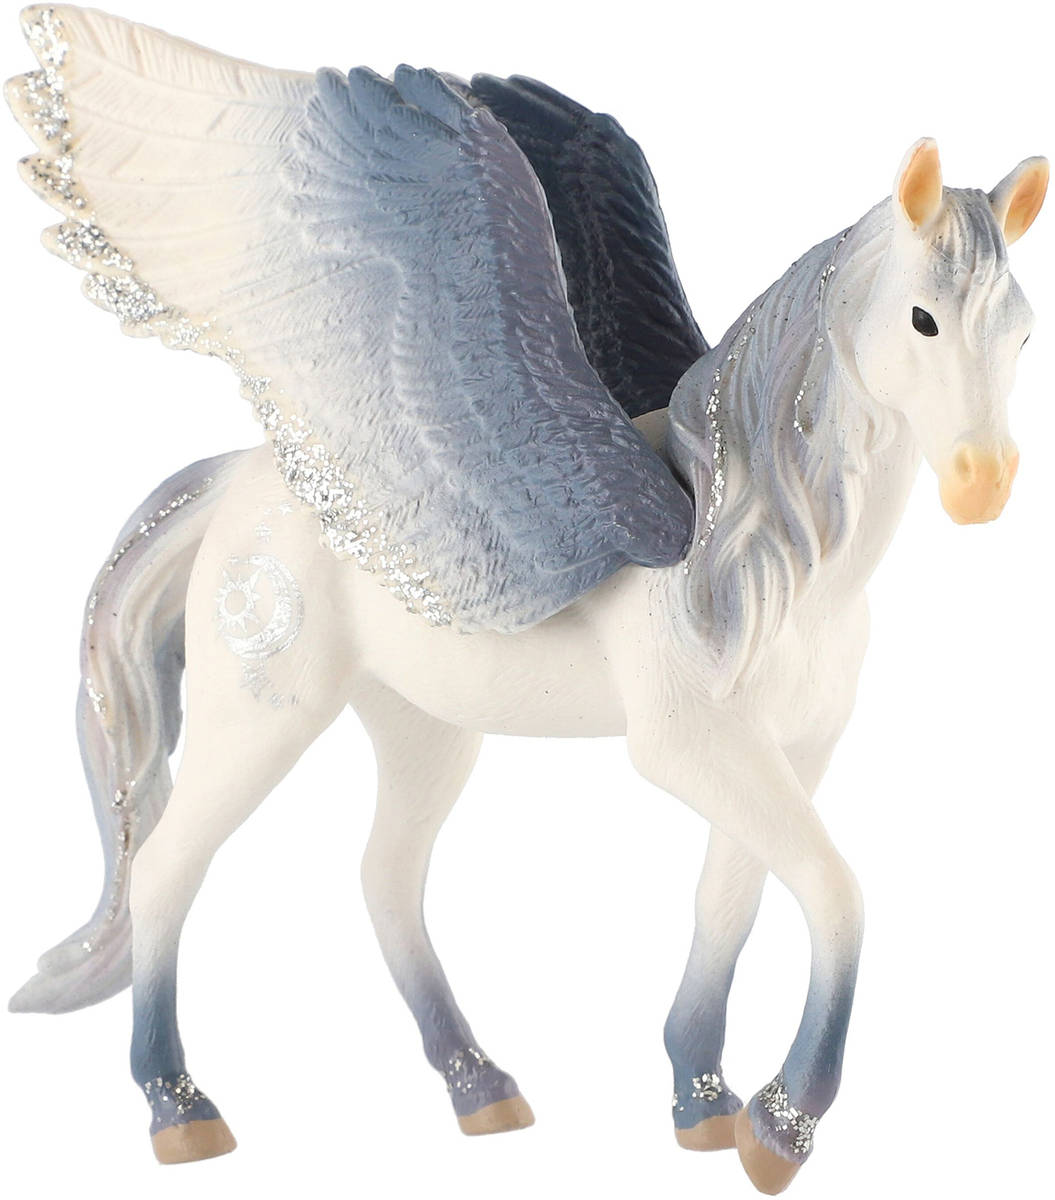 Kůň s křídly bílo-šedý 14cm pegas Zooted plast v sáčku